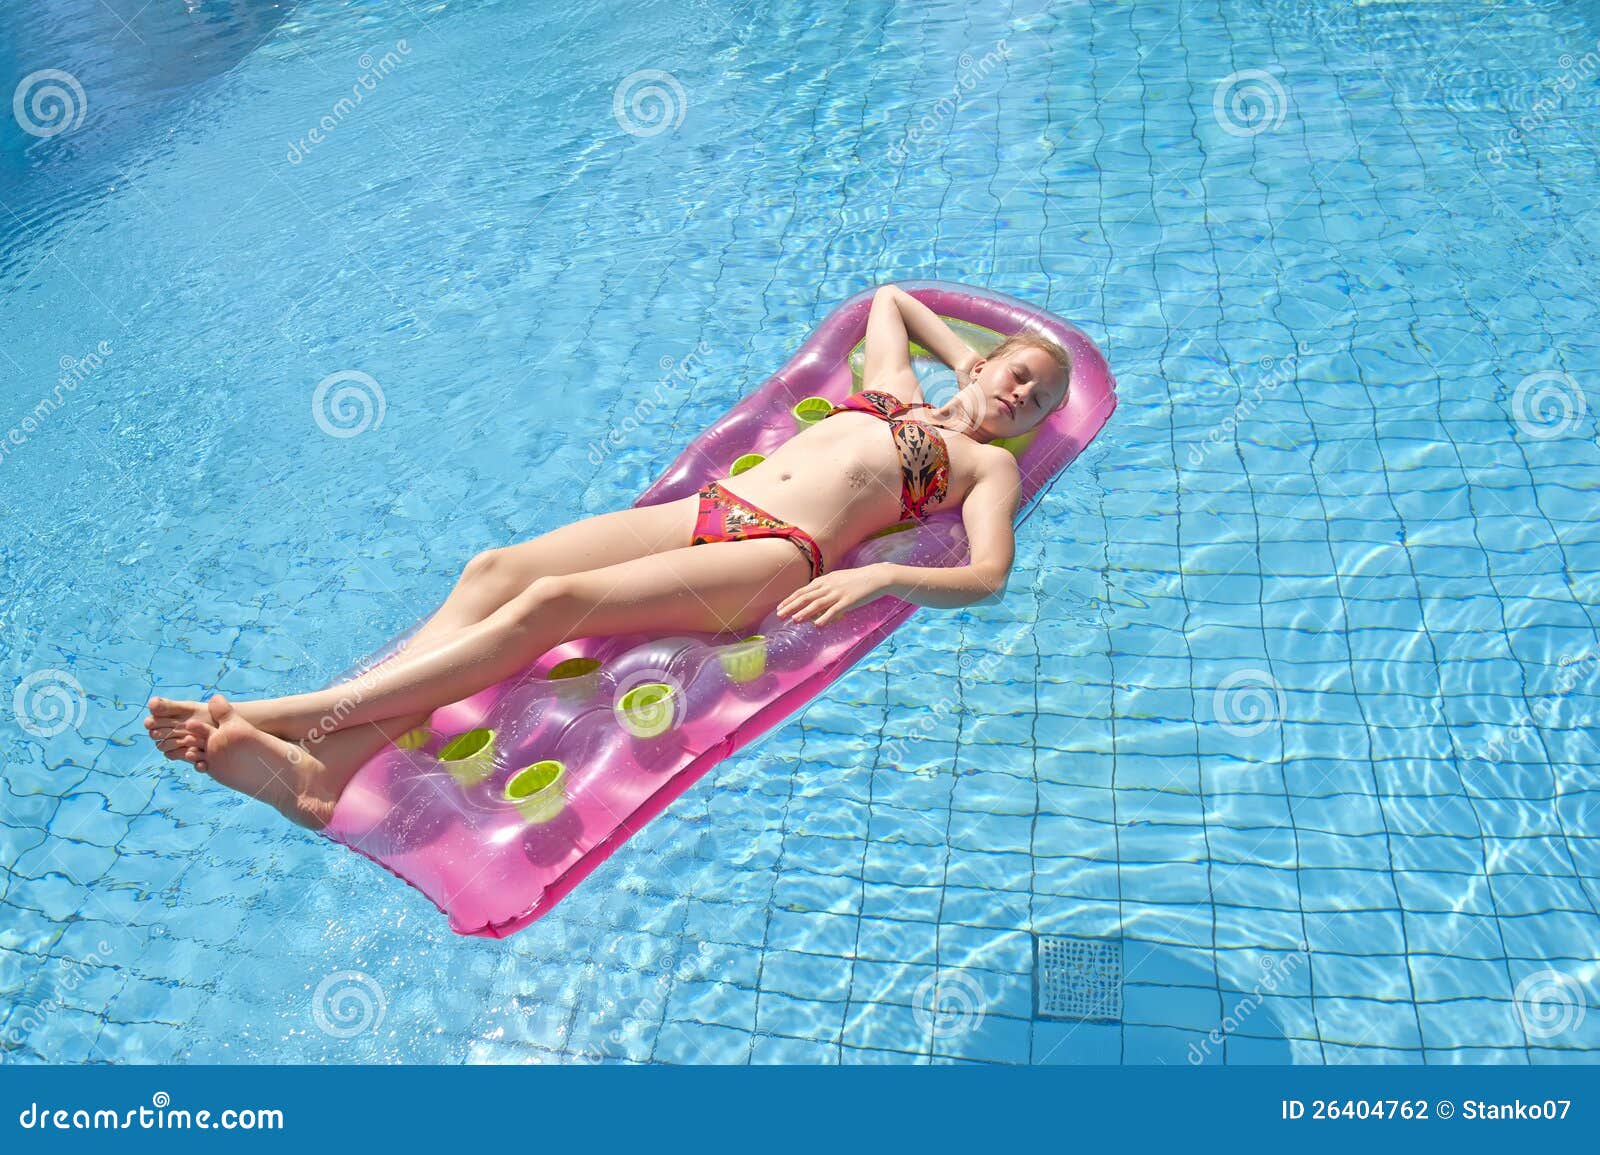 girl sunbathing on a mattress